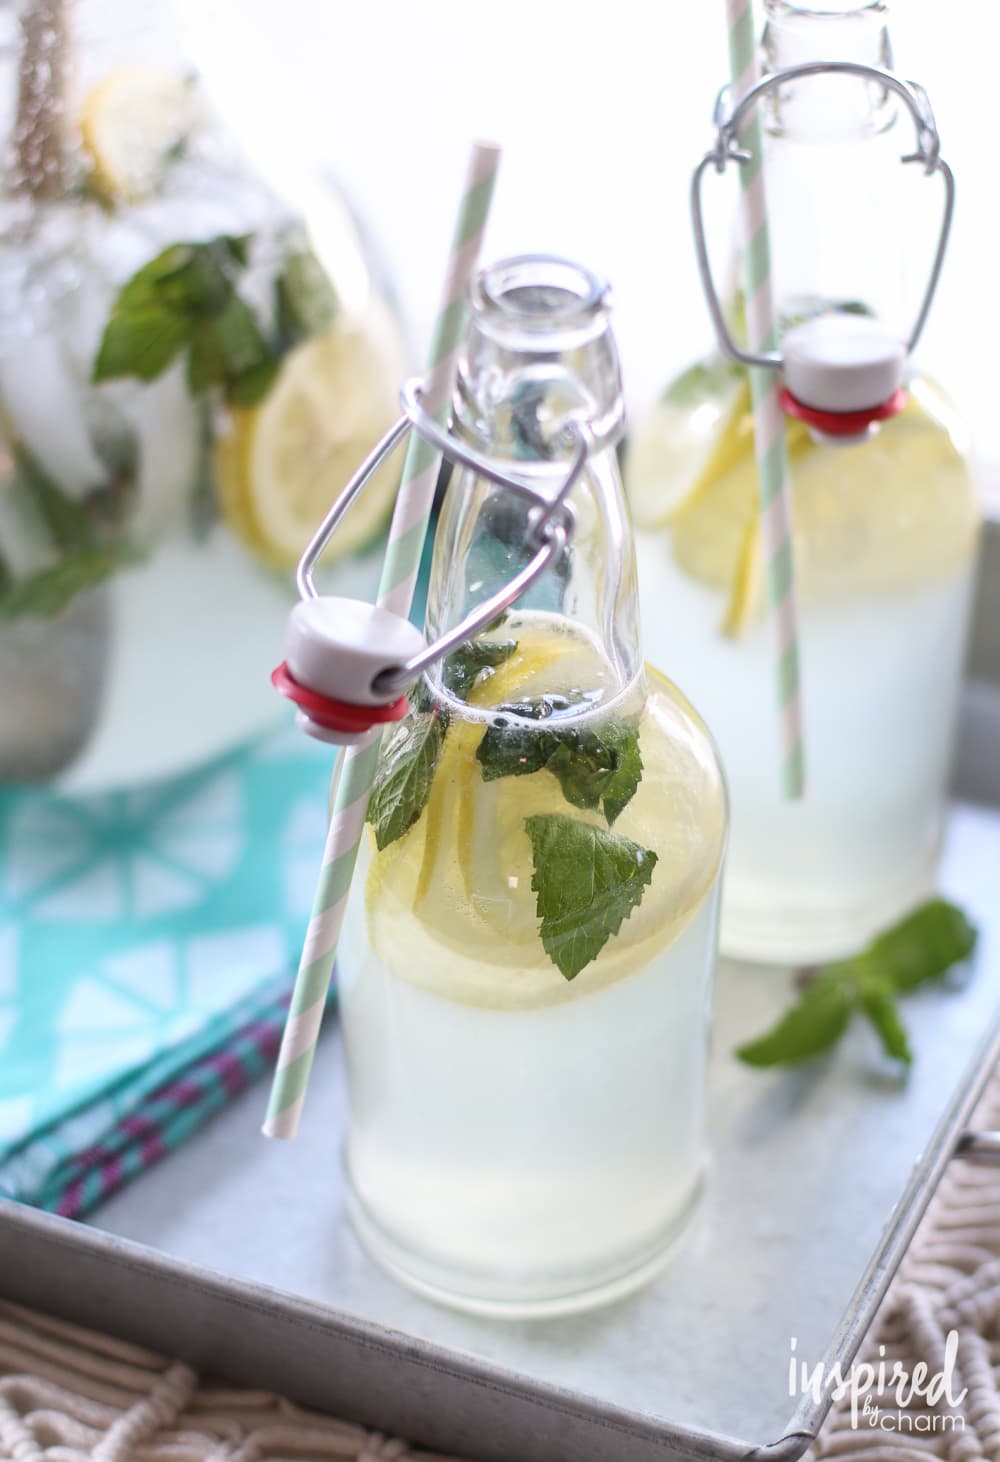 How to Make Sparkling Mint Lemonade #mint #lemonade #recipe #summer #drink